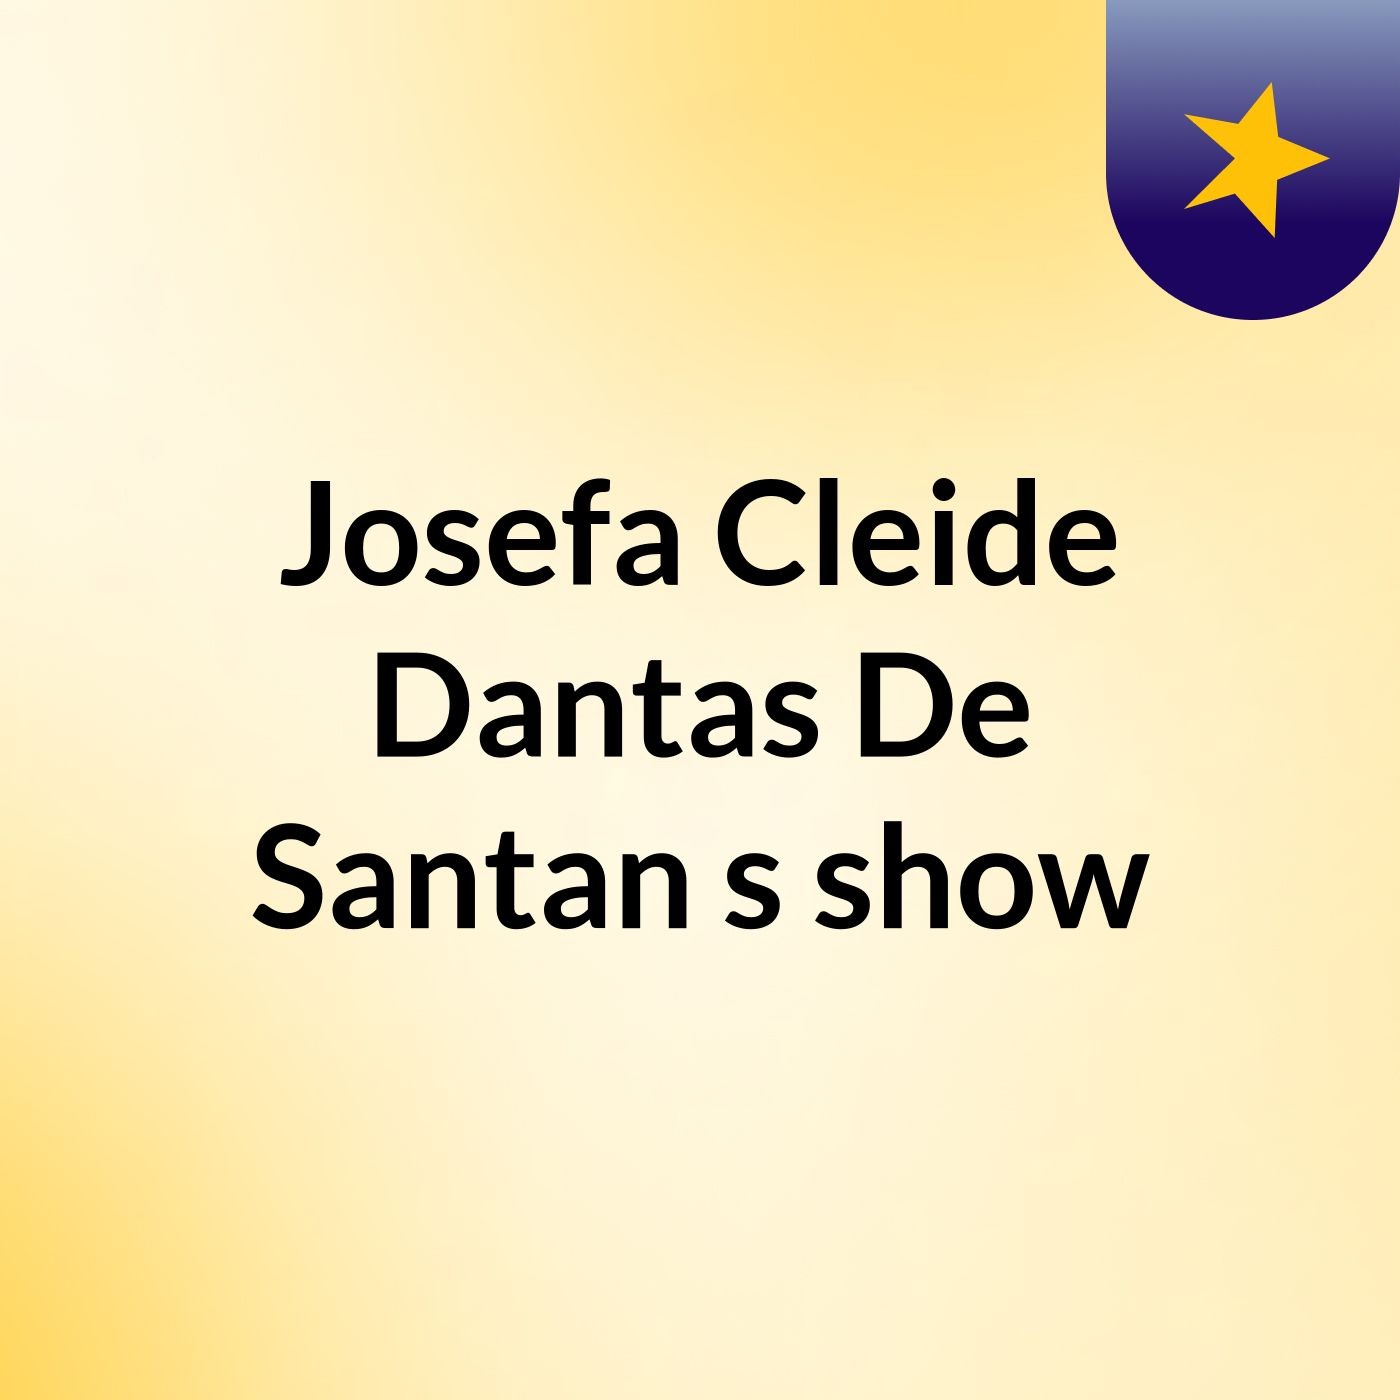 Josefa Cleide Dantas De Santan's show